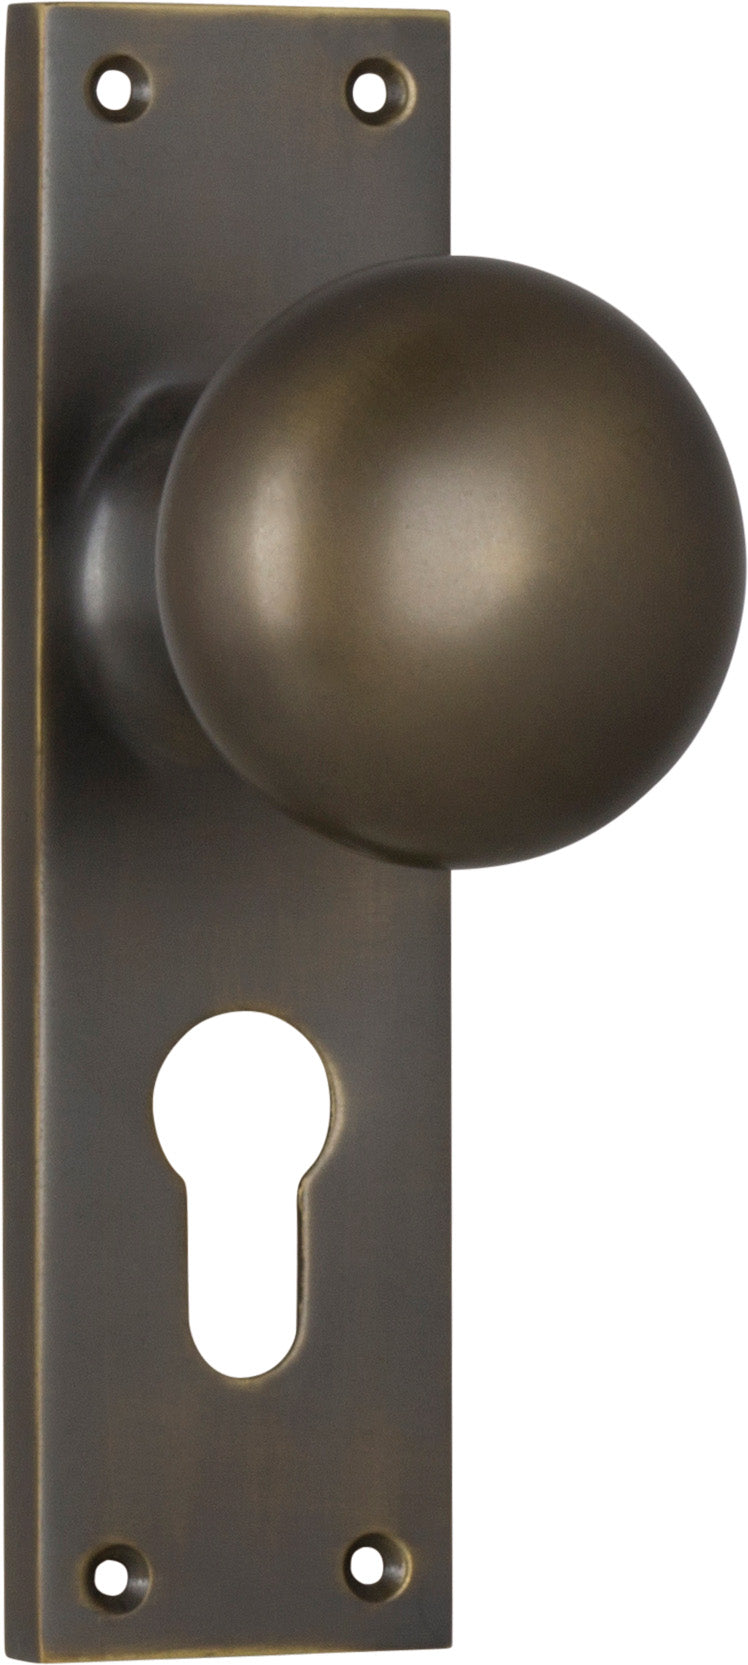 Victorian Door Knob - Long Backplate by Tradco